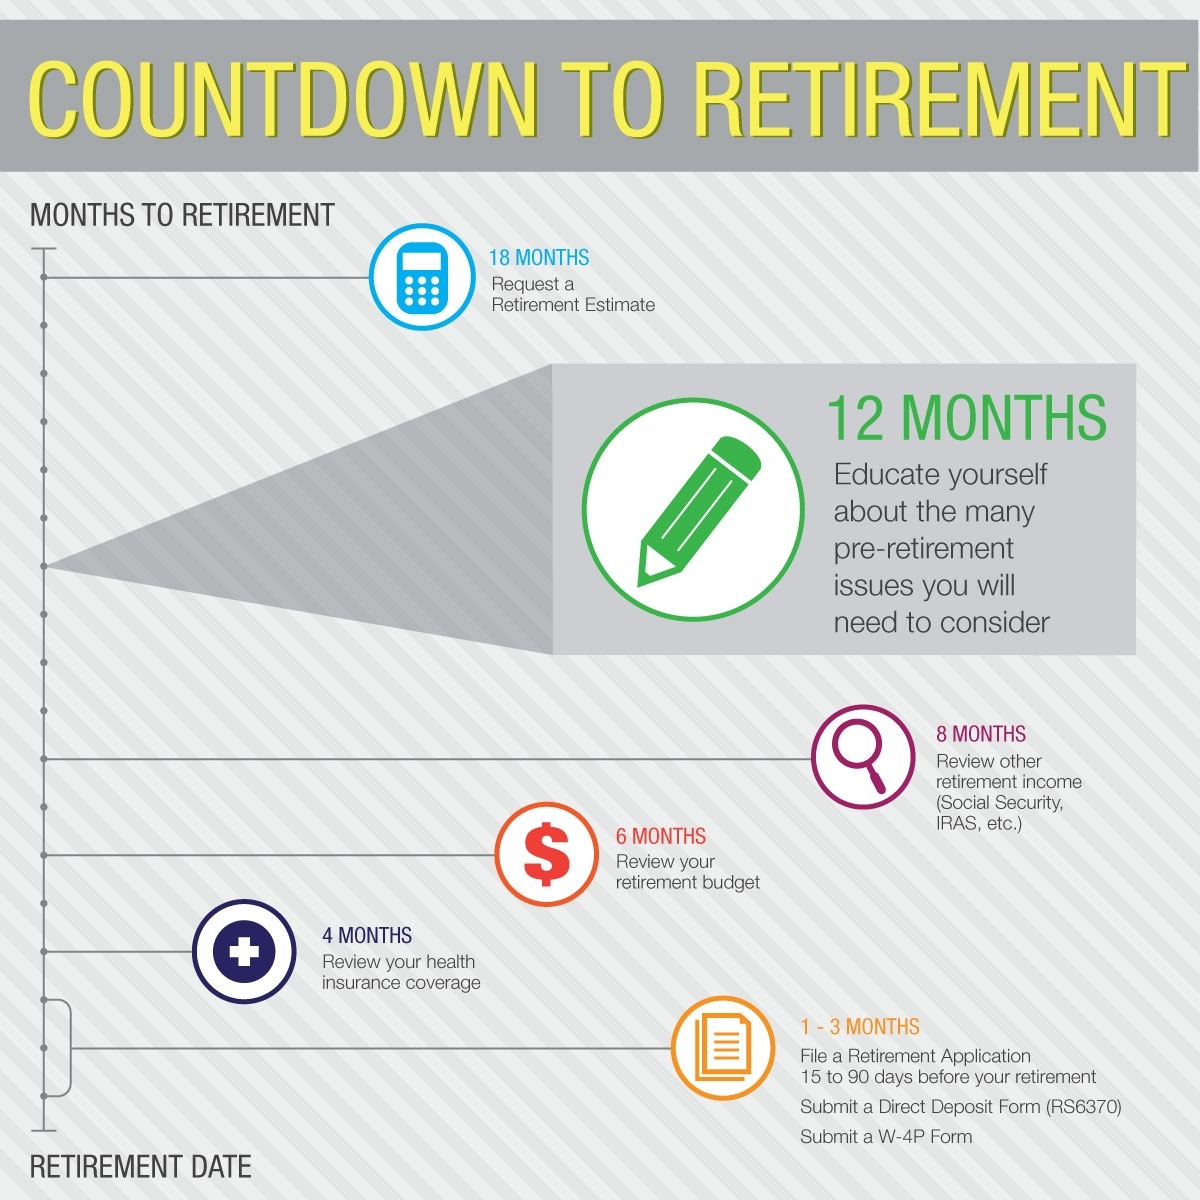 Countdown Retirement Calendar 2017 | Free Calendar 2017 Retirement Countdown Calendar For Desktop